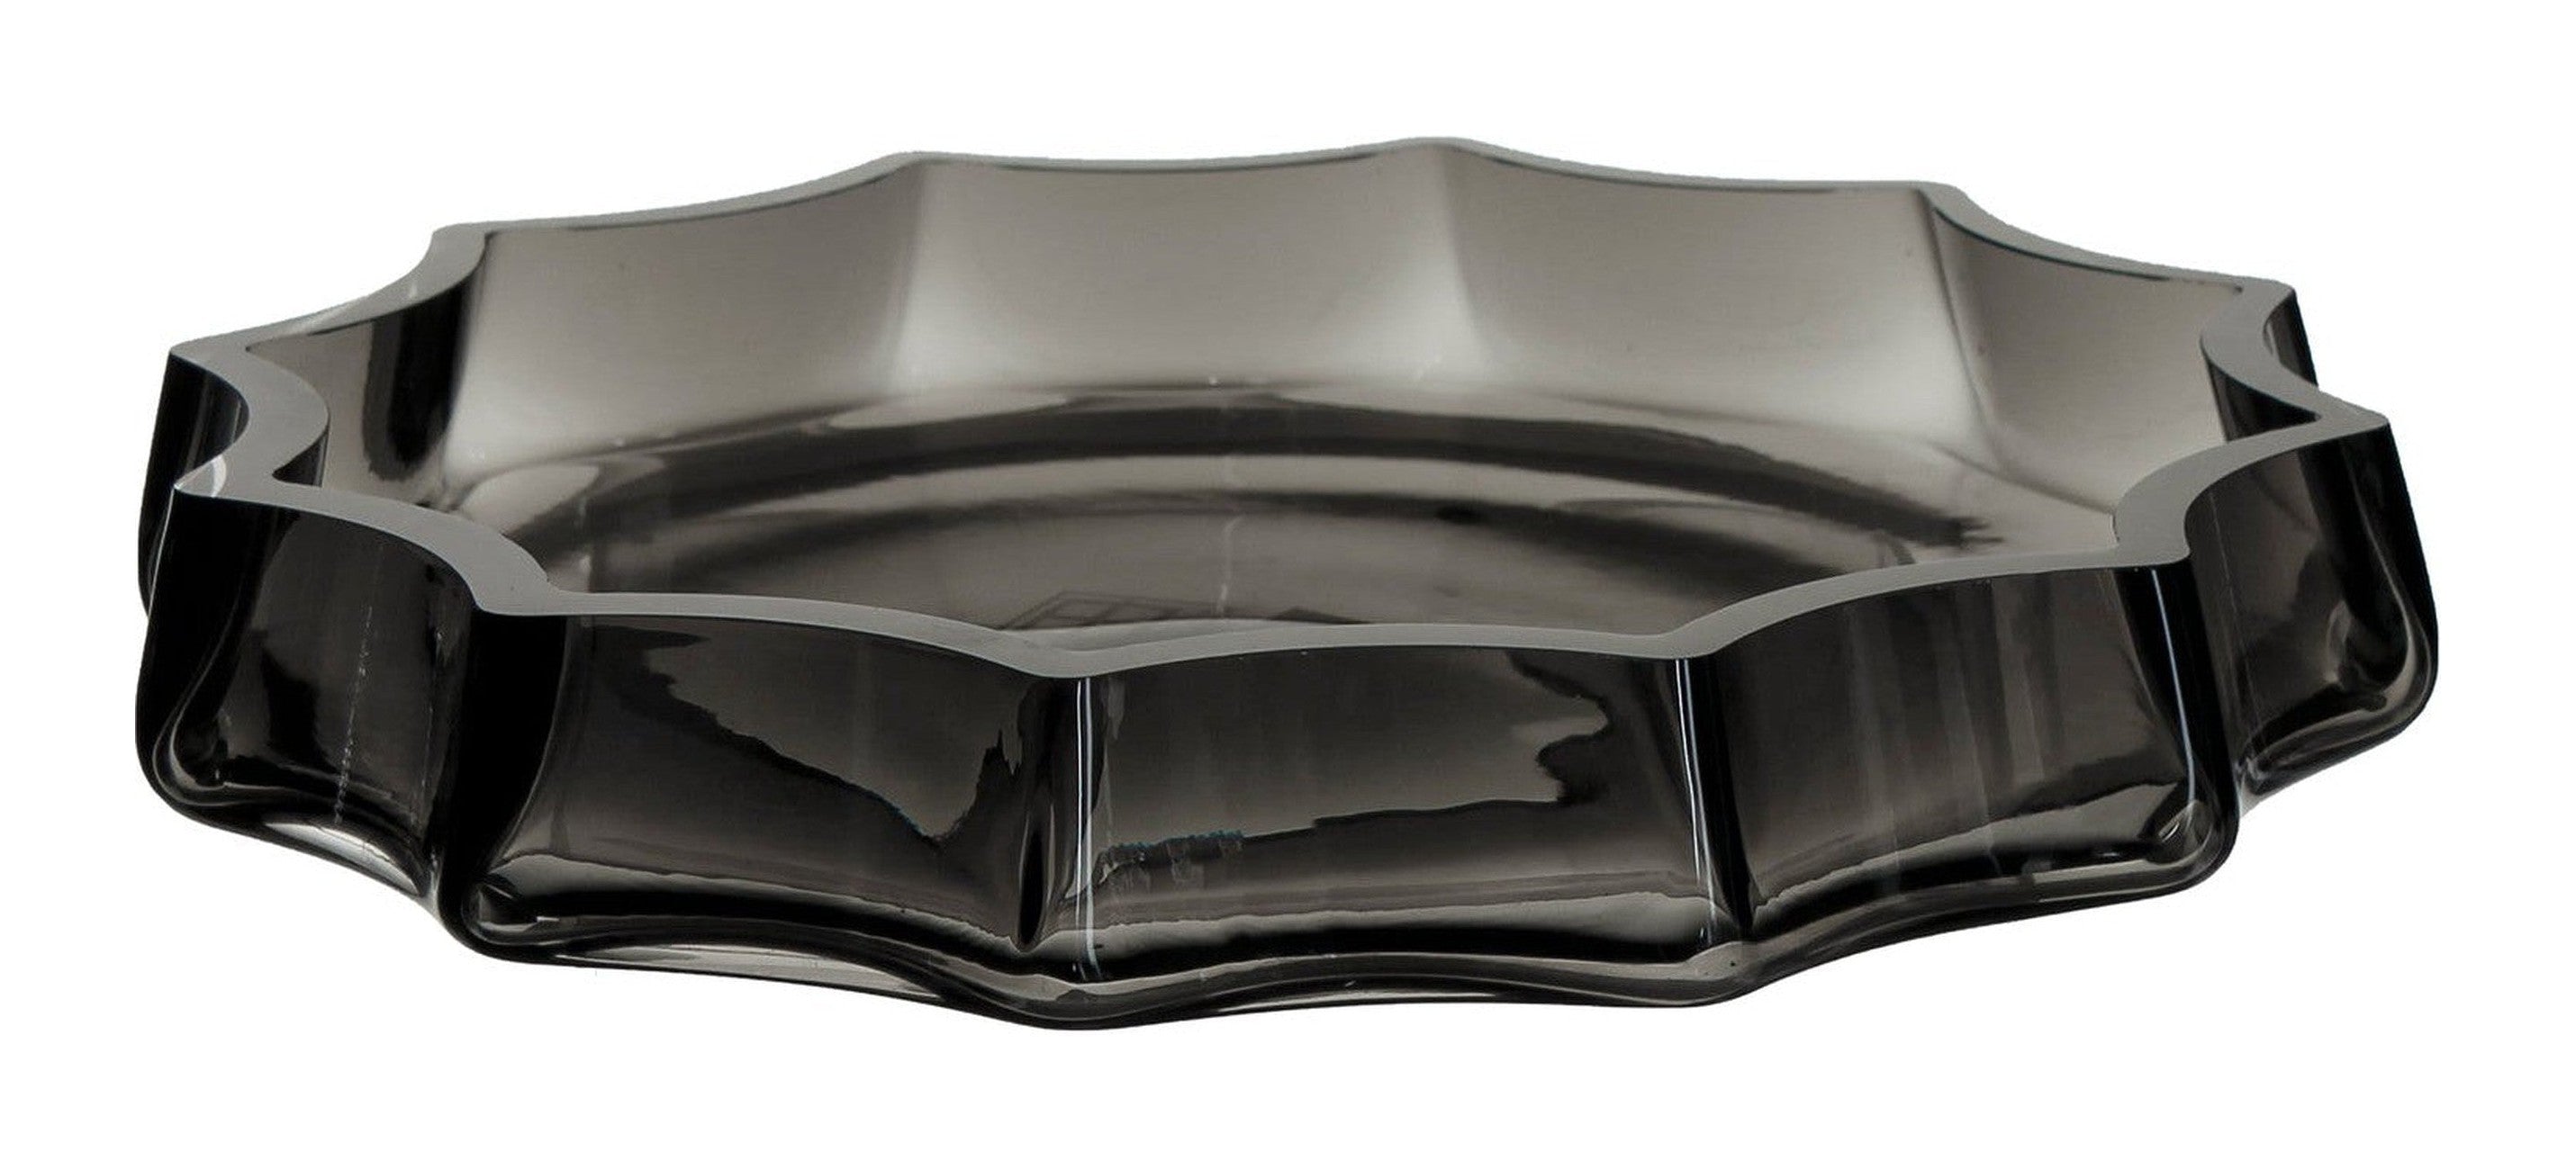 Modern-Classic Luxury large bowl or vessel, stylish design, LENOX 05